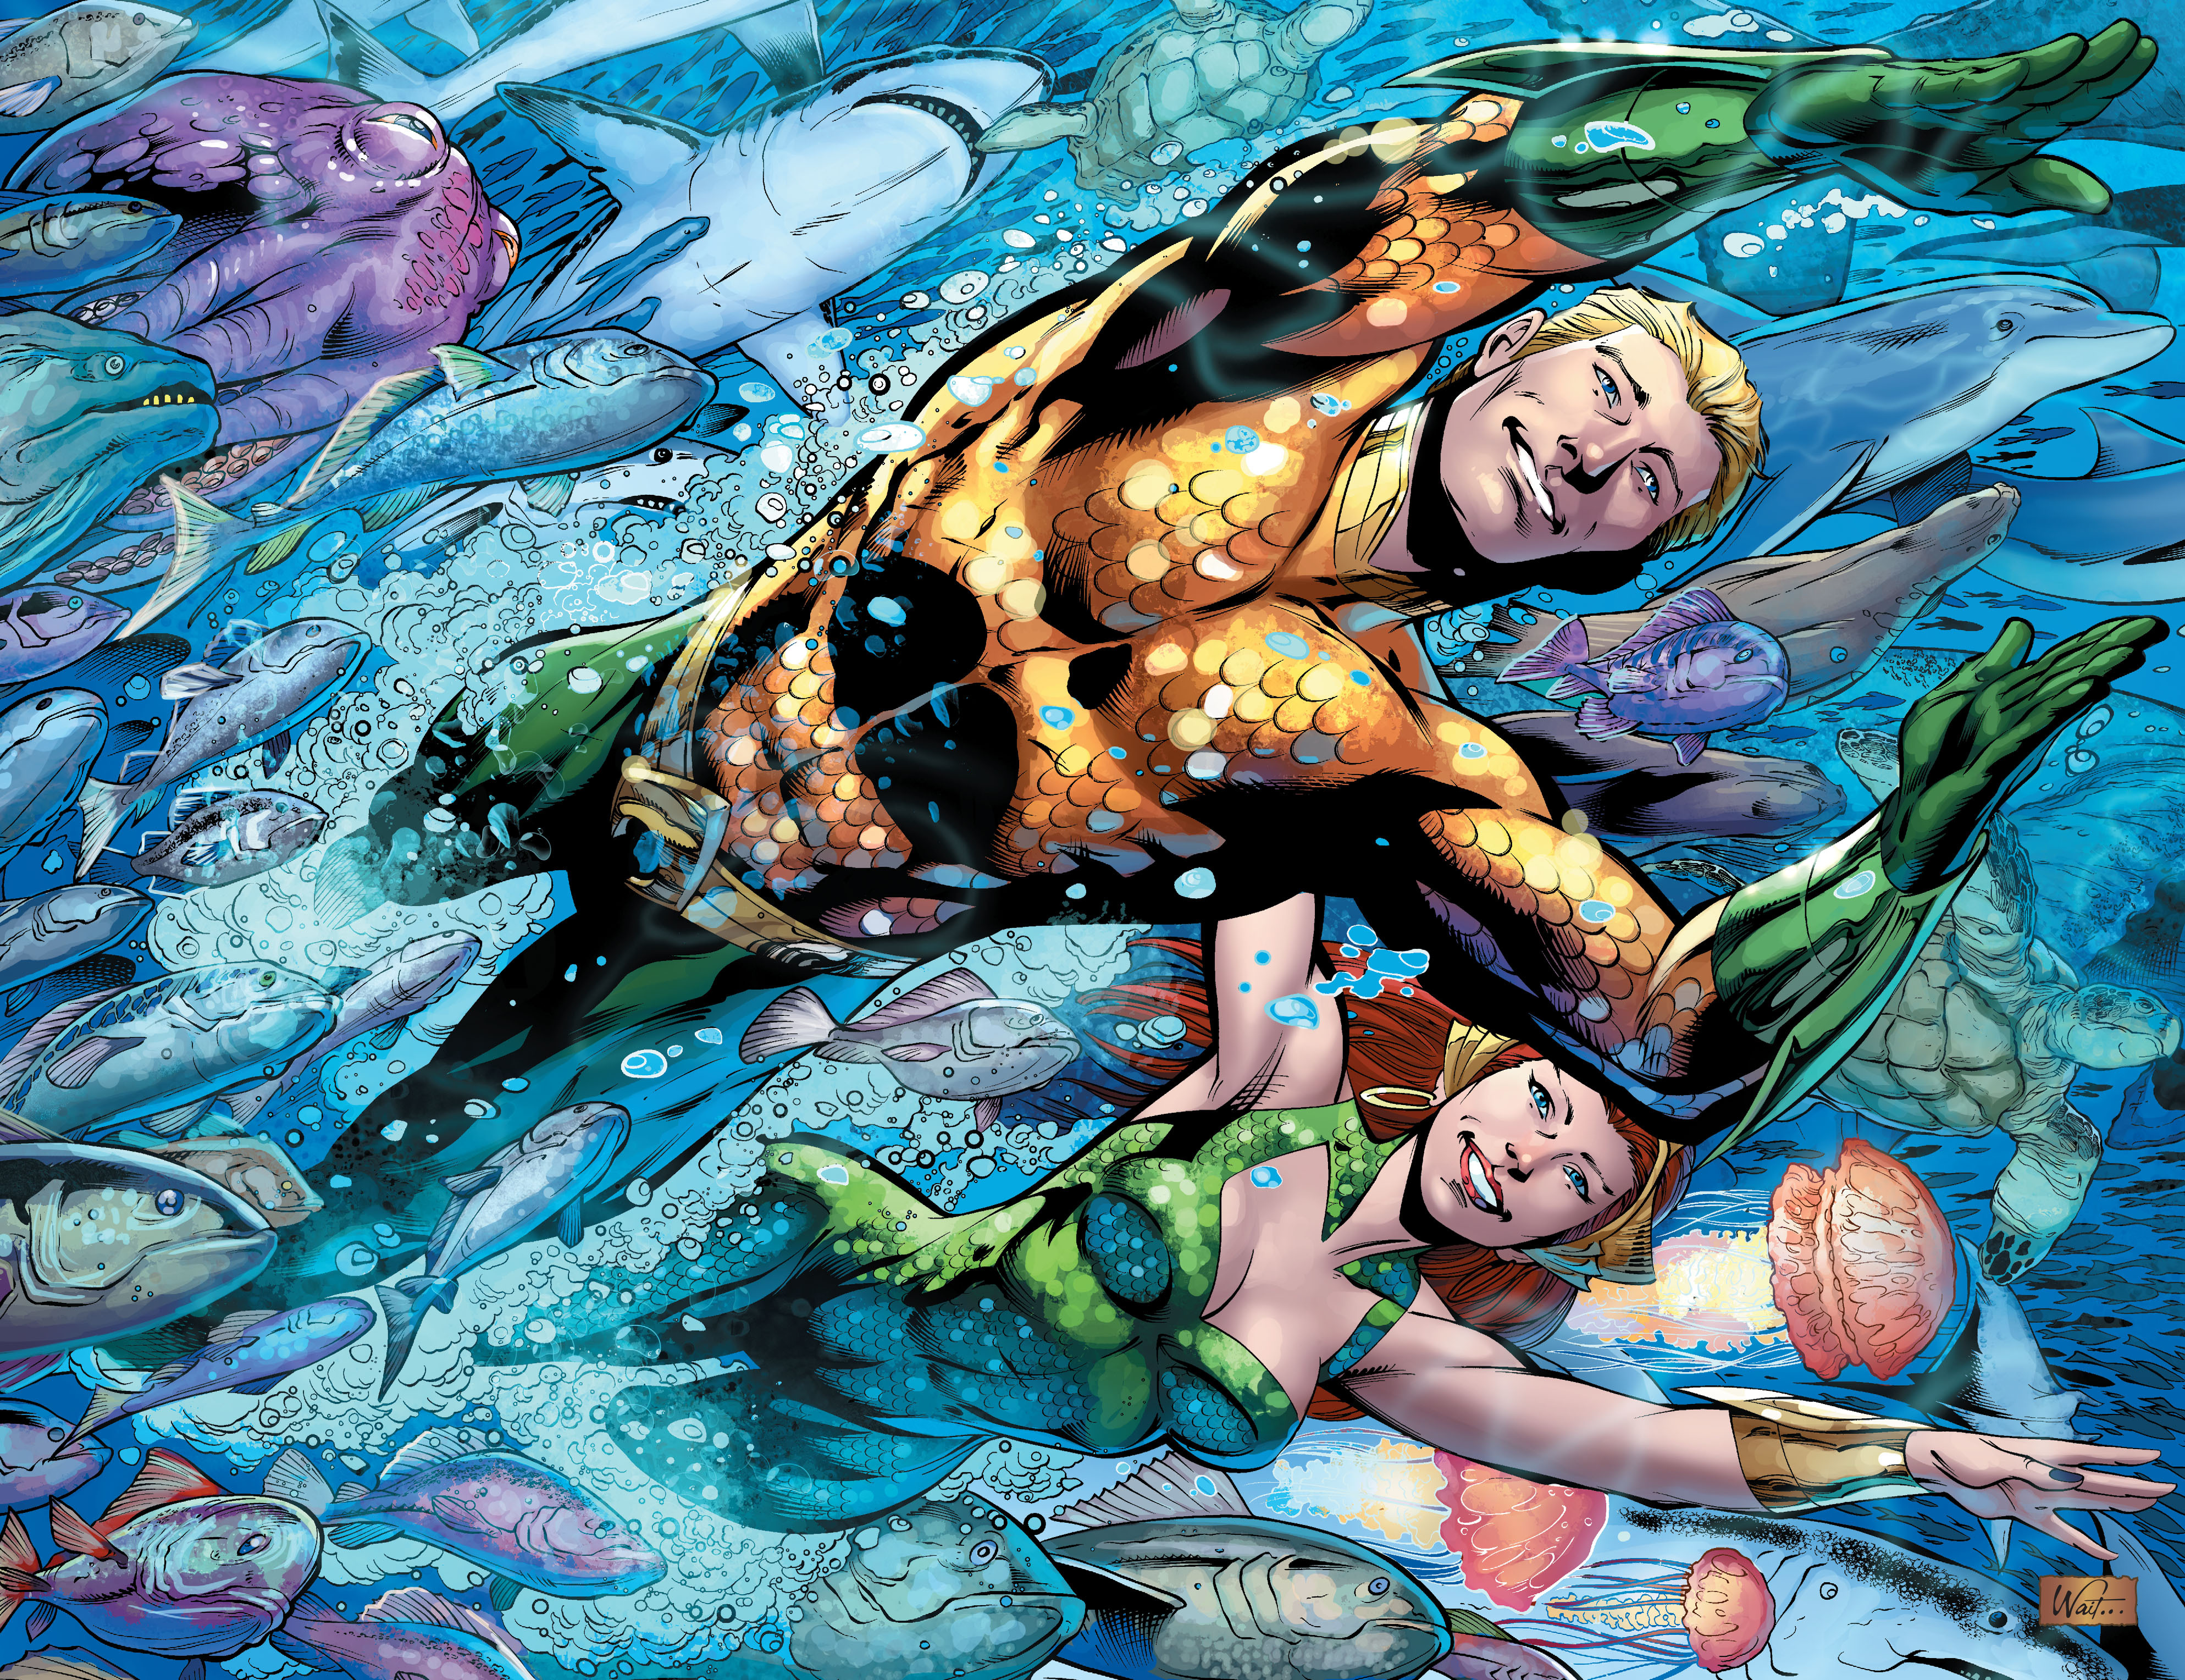 Aquaman Death of a King review